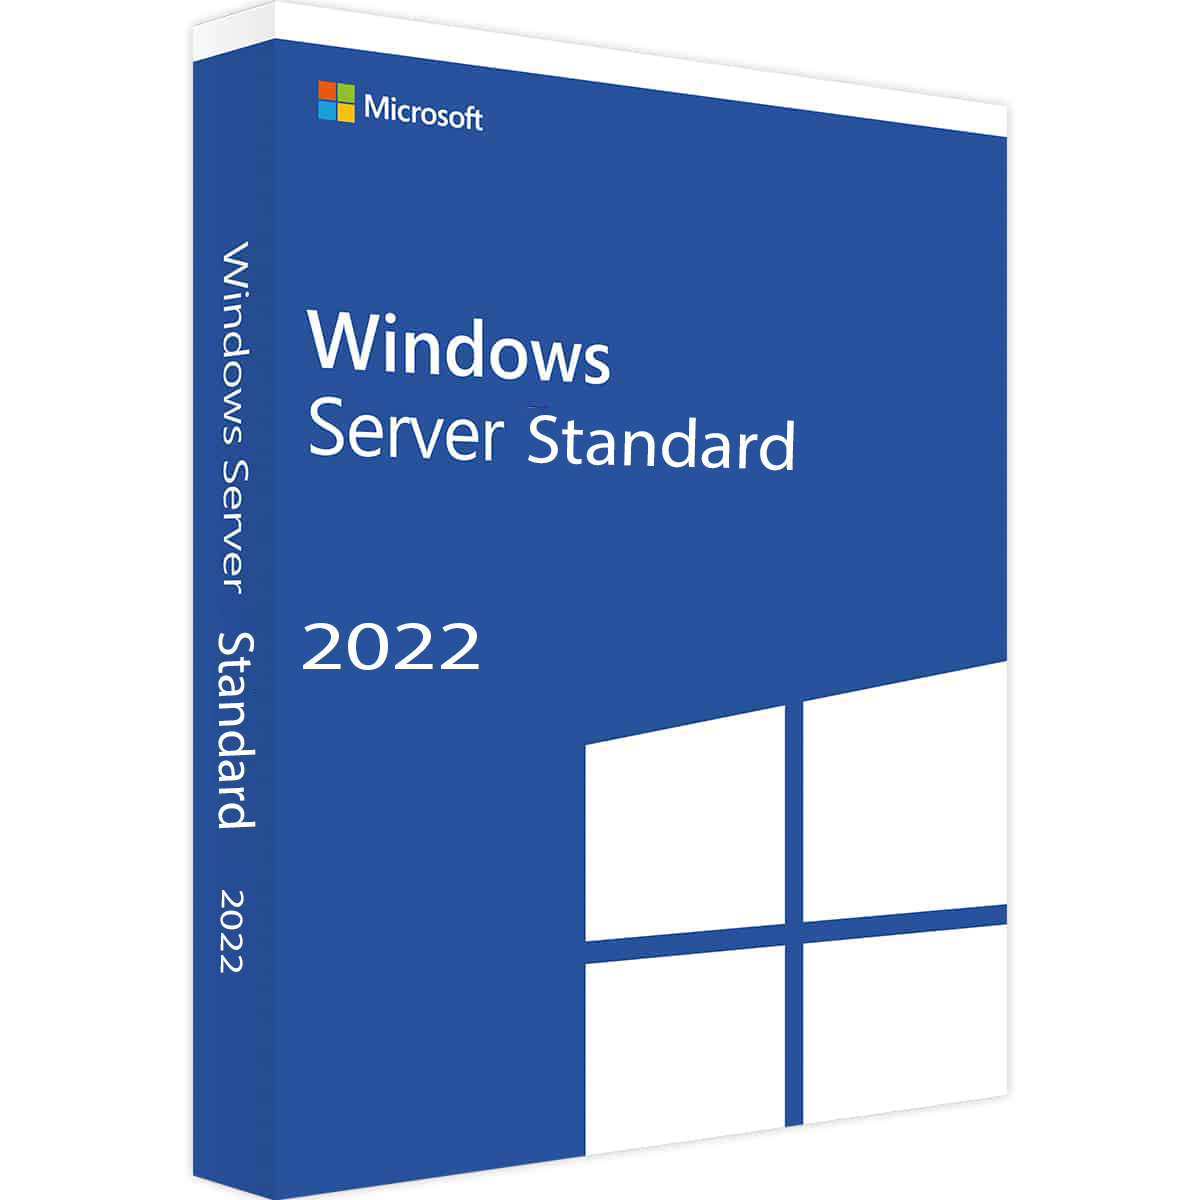 Microsoft Windows Server Standard 2022 64bit English 1pk Dsp Oei Dvd 16 Cores Thegioimaychuvn 8336